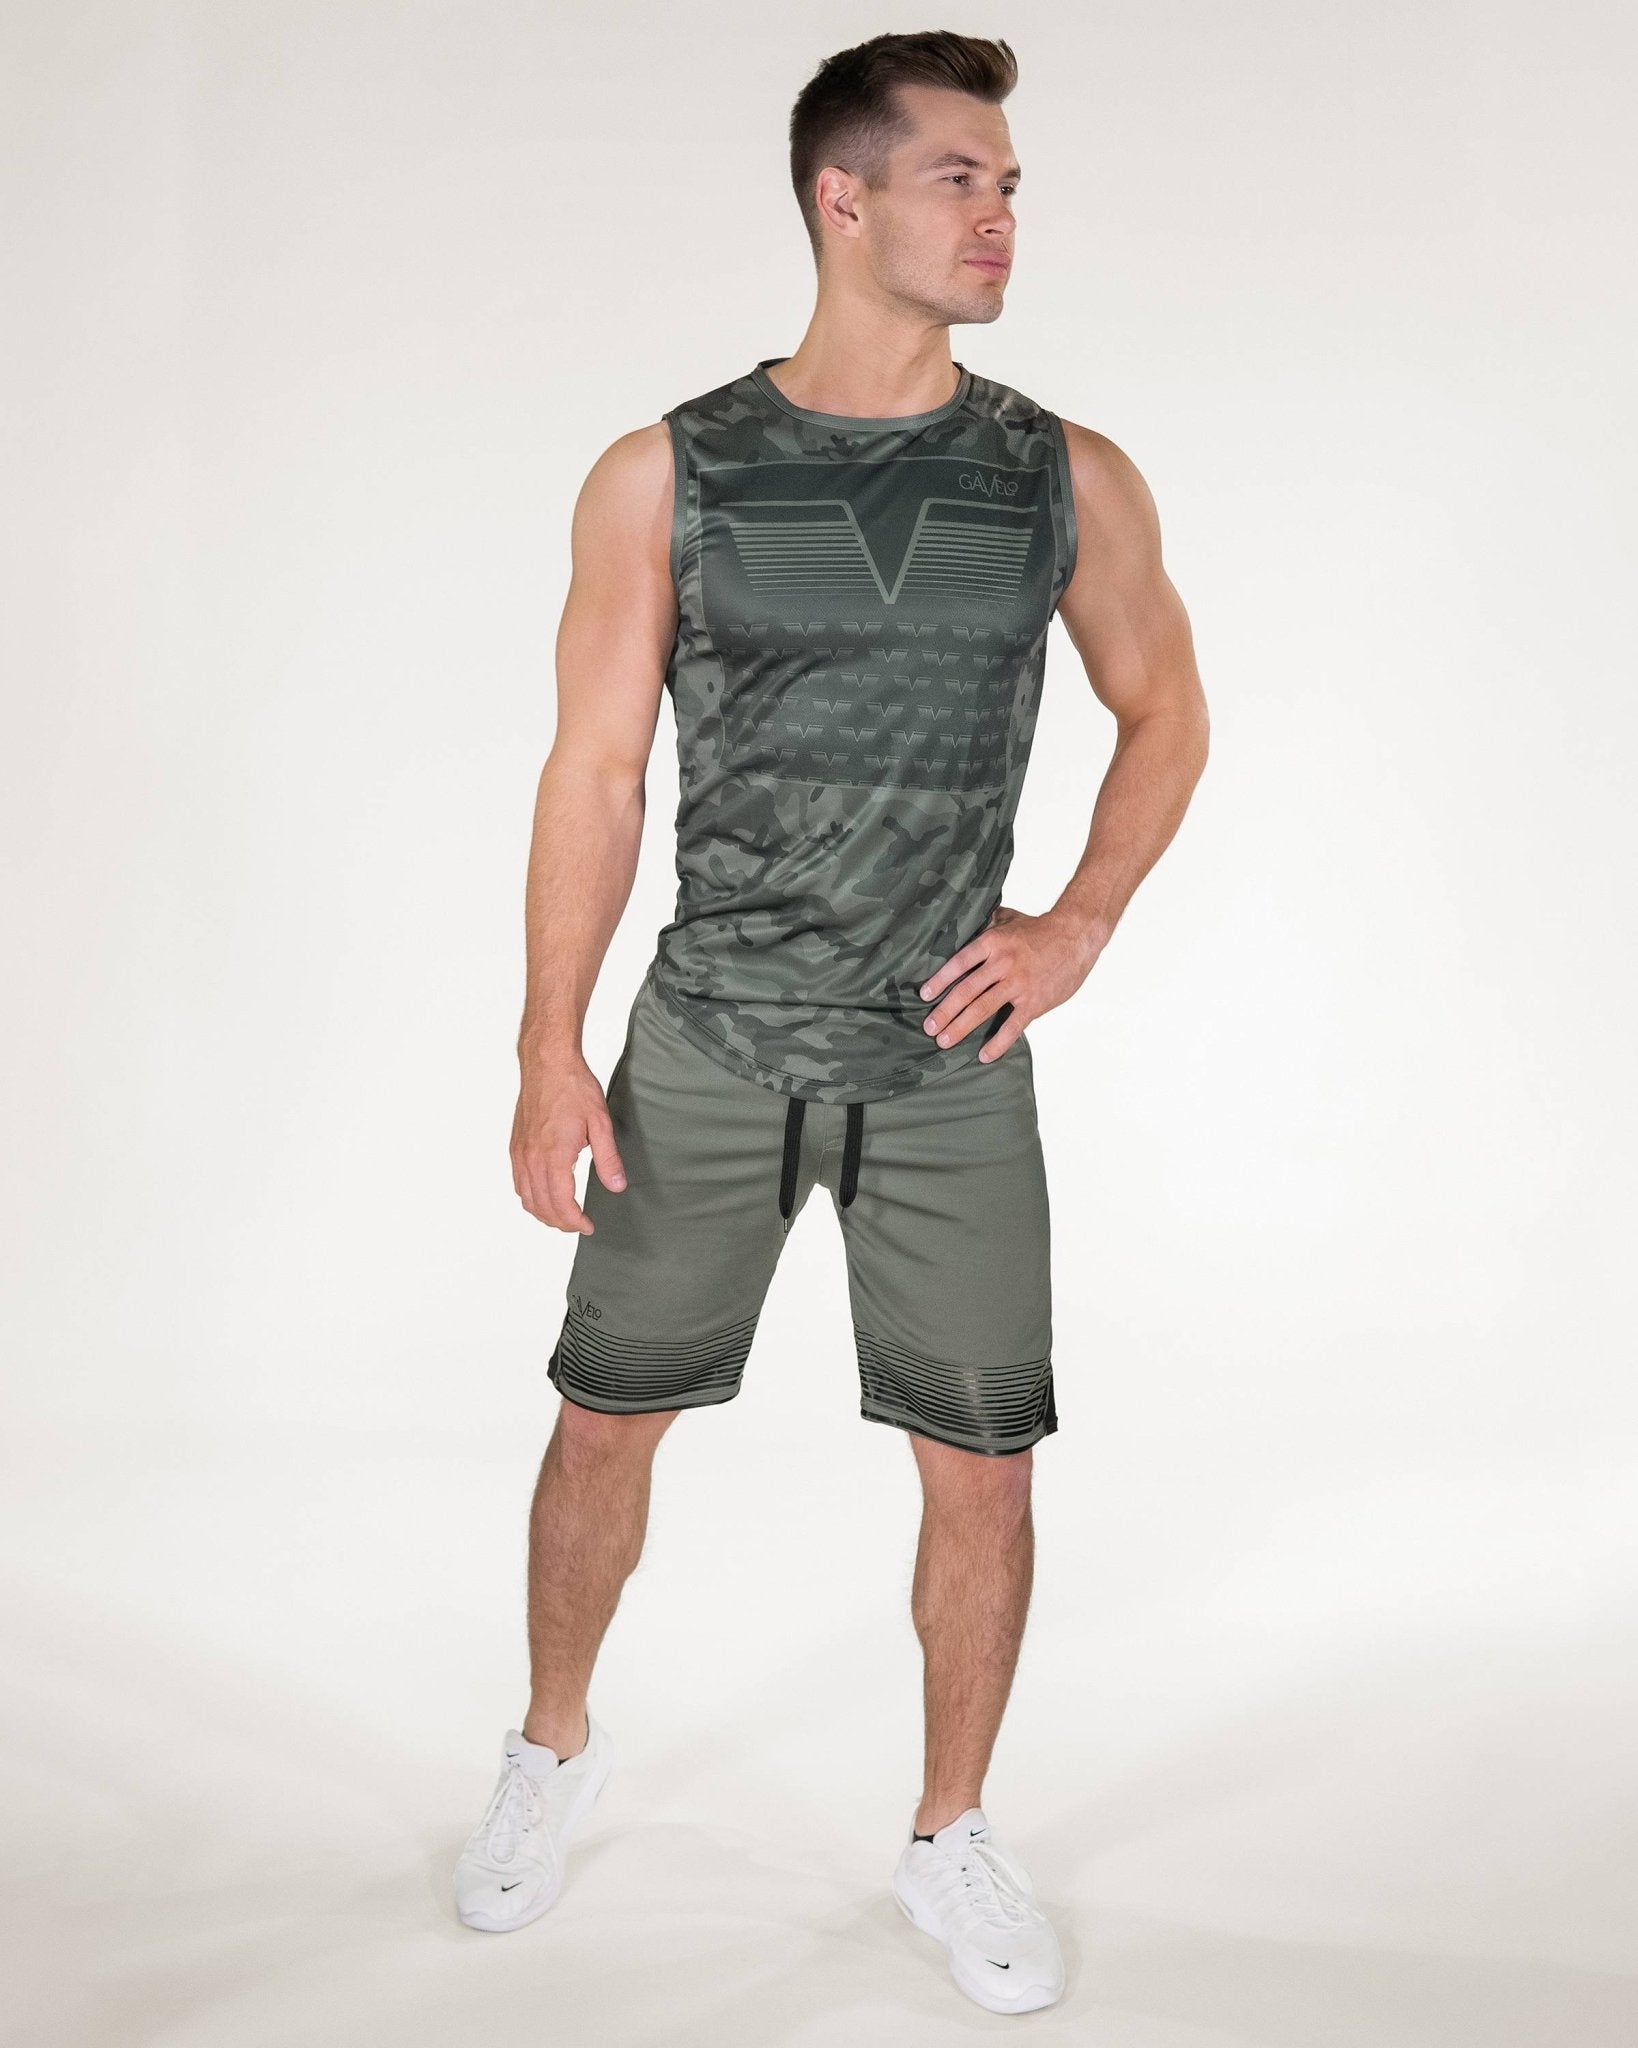 Gavelo Sniper Green Shorts - Urban Gym Wear